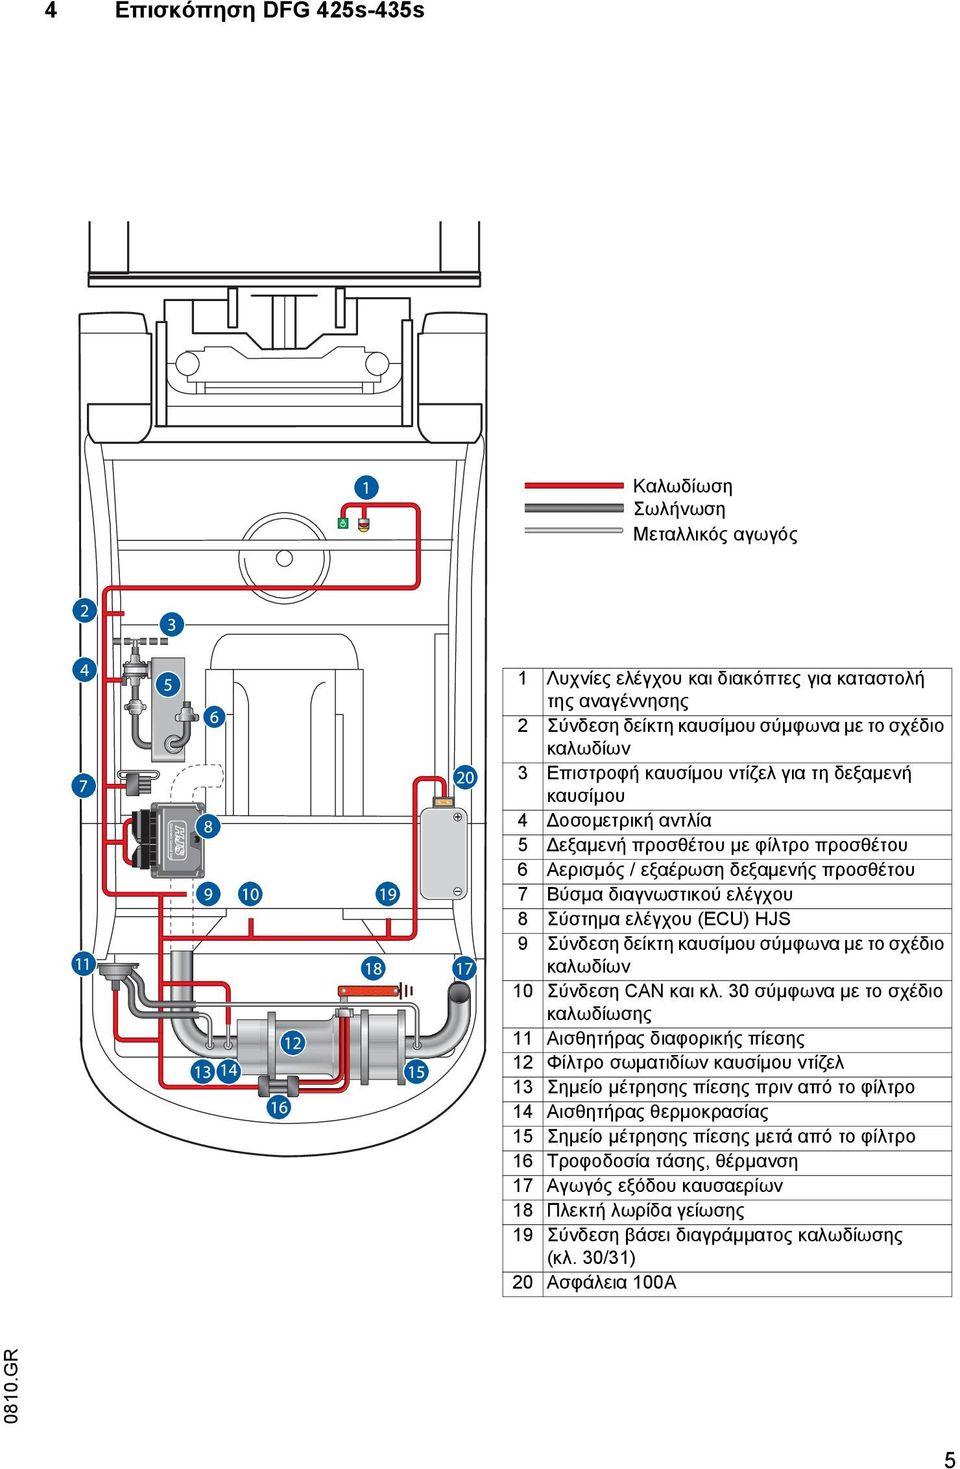 HJS 9 Σύνδεση δείκτη καυσίμου σύμφωνα με το σχέδιο καλωδίων 10 Σύνδεση CAN και κλ.